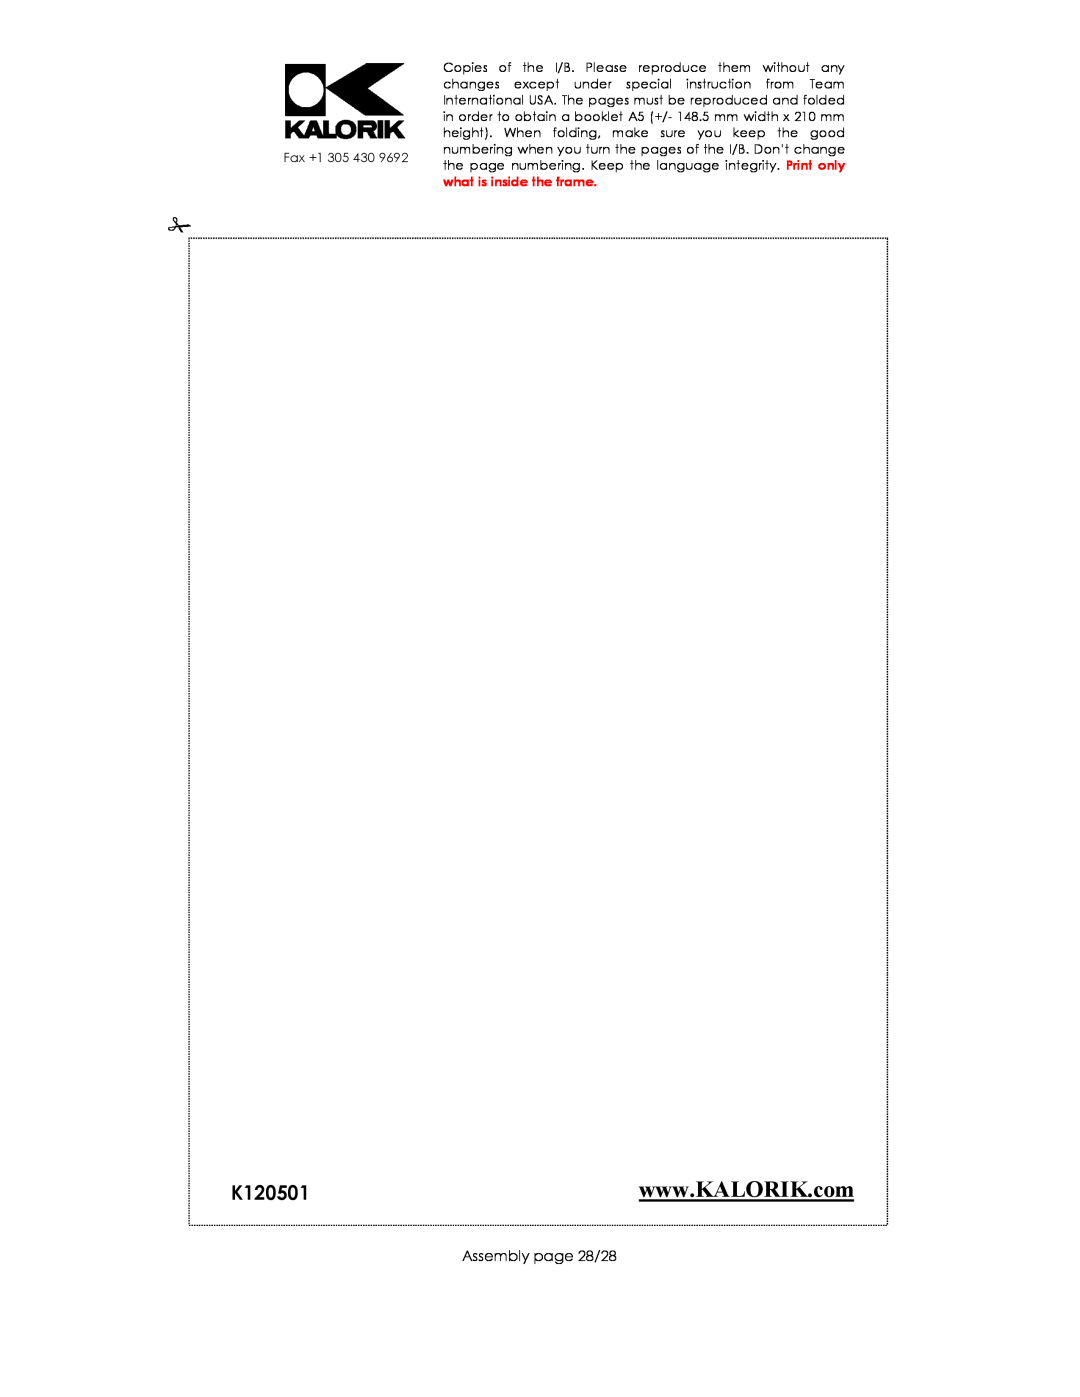 Kalorik SWP 39888 manual Assembly page 28/28 